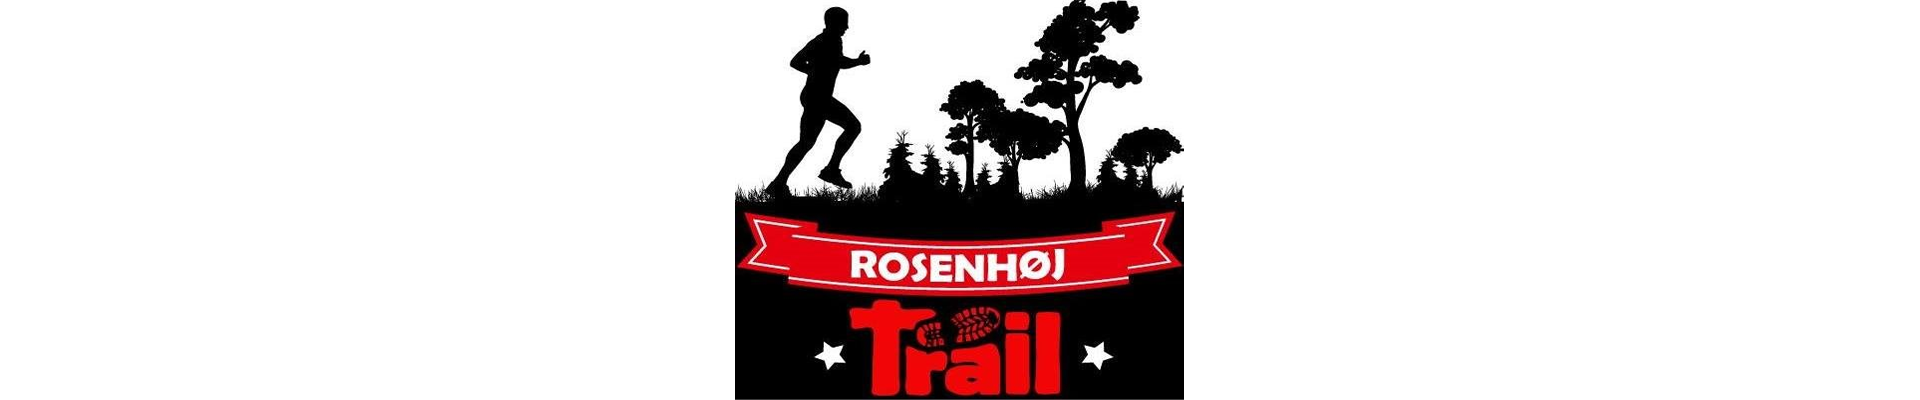 Rosenhøj Trail 2020 - DM LANG TRAIL